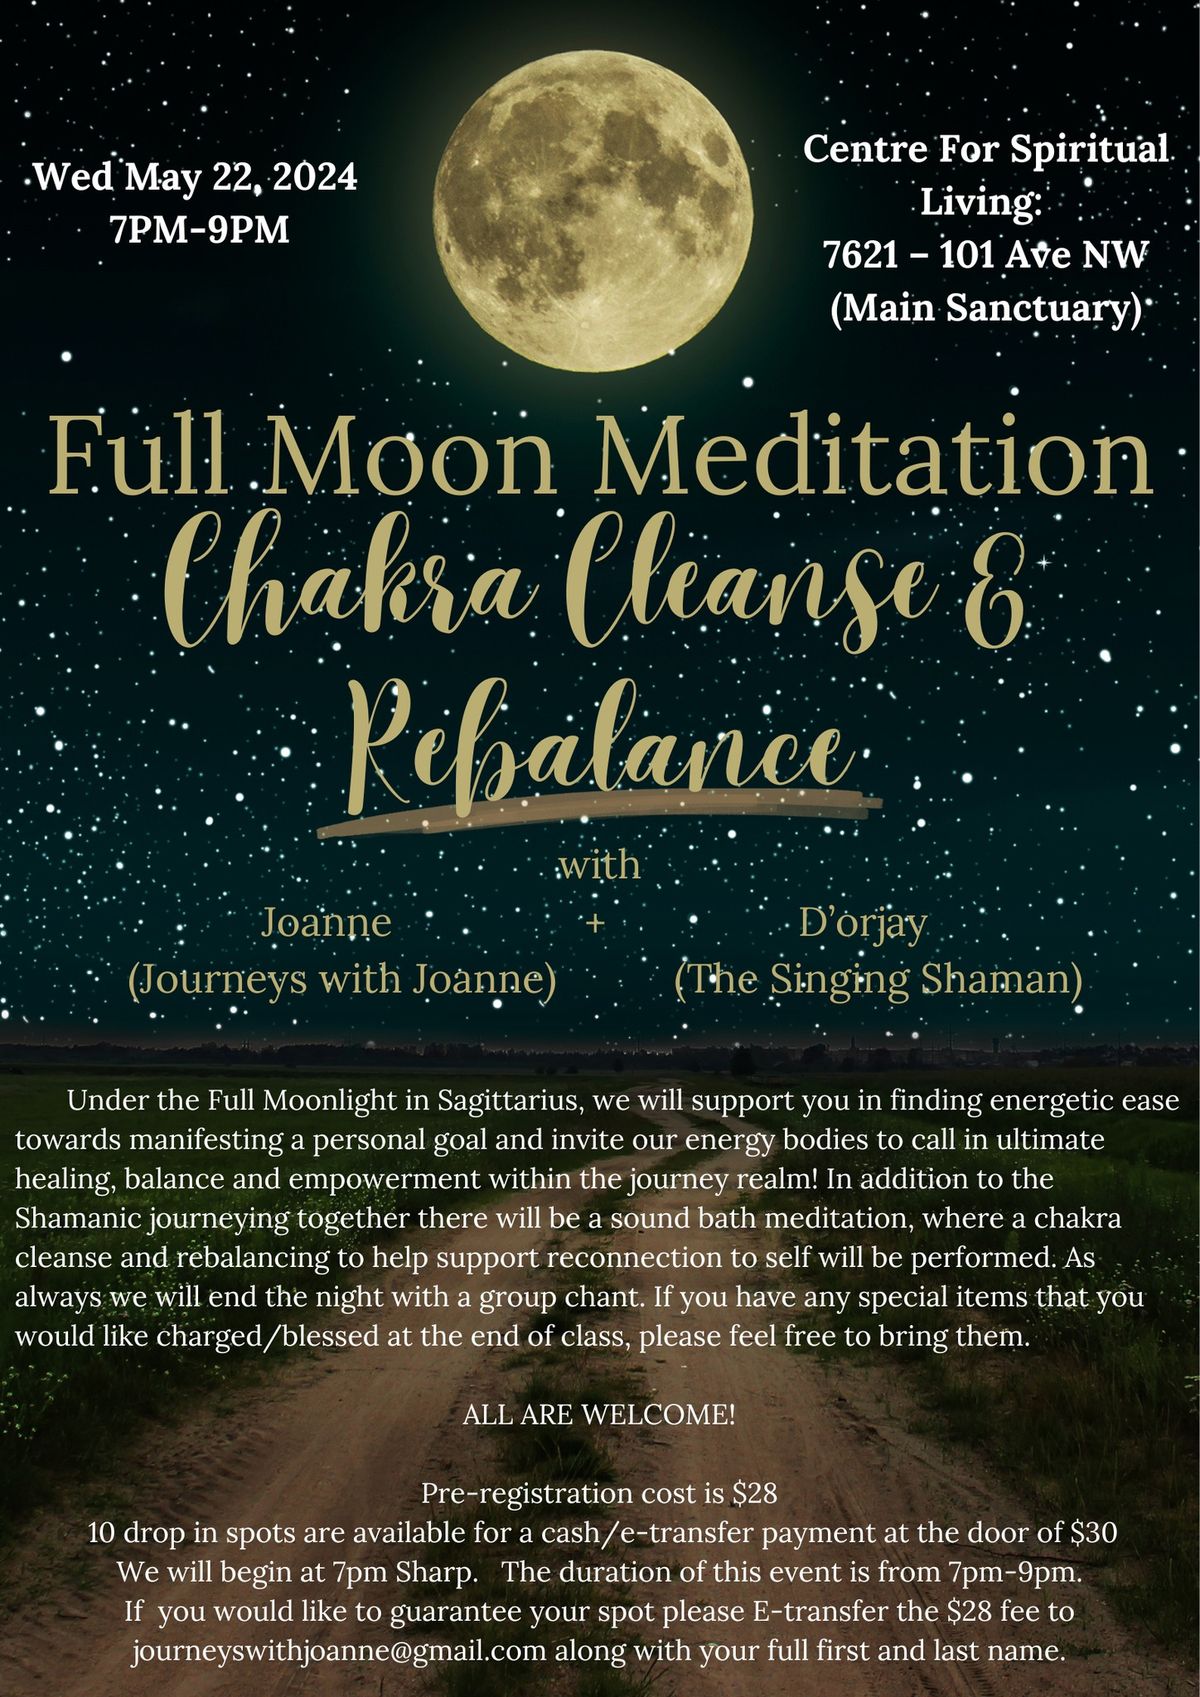 Full Moon Meditation Chakra Cleanse & Rebalance